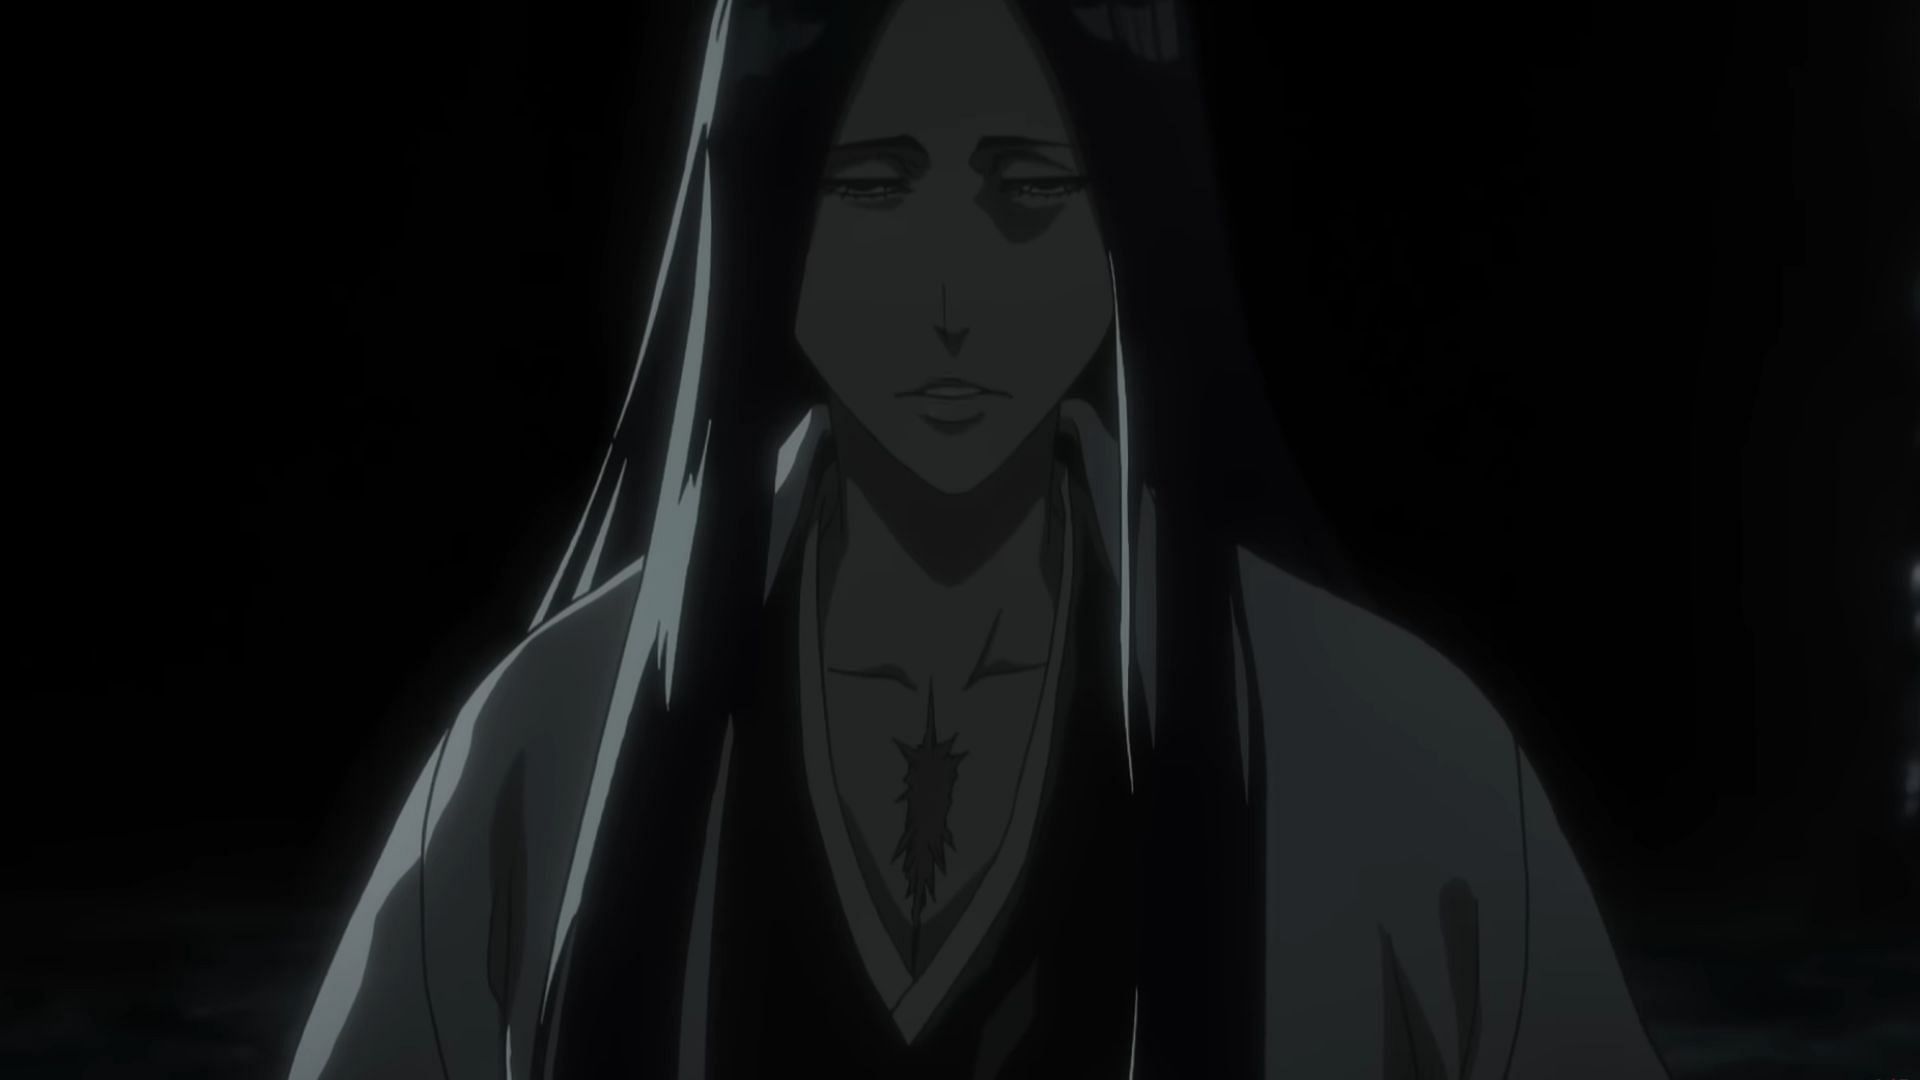 Yachiru Unohana as seen in Bleach: Thousand-Year Blood War episode 9 (image via Studio Pierrot)